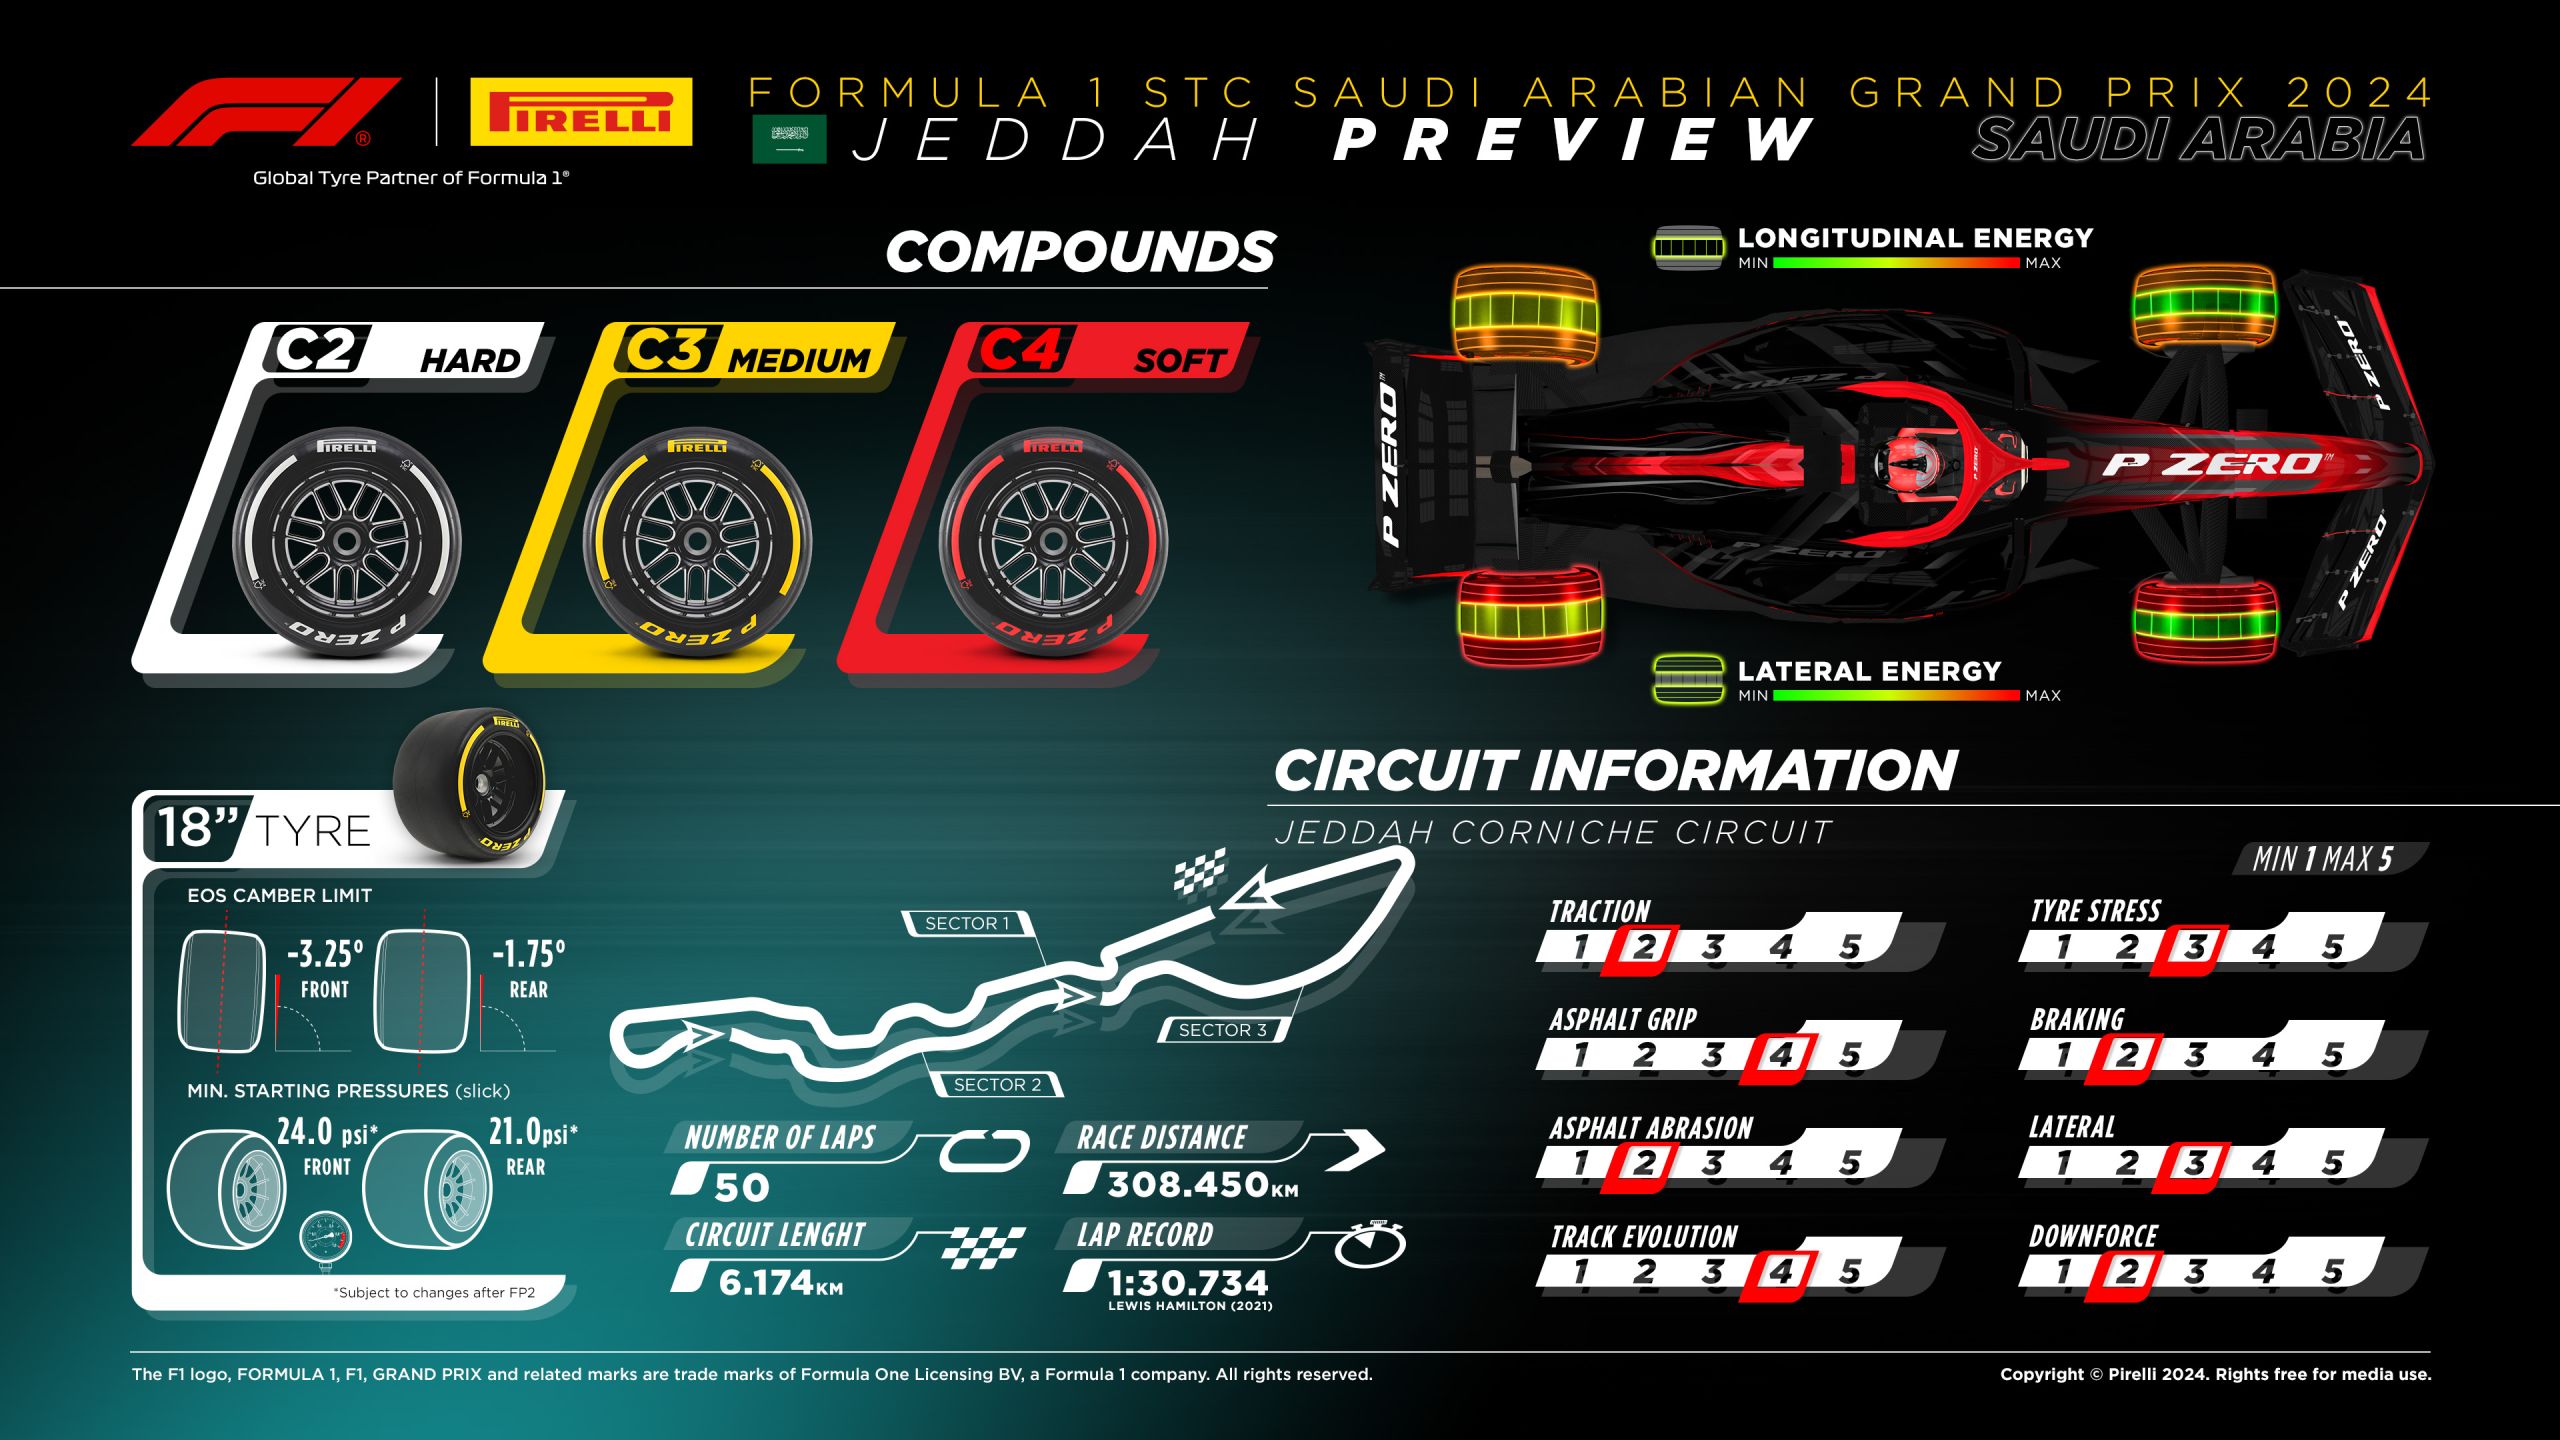 Pirelli Bringing Mid-Range Compounds To The 2024 Saudi Arabian Grand Prix